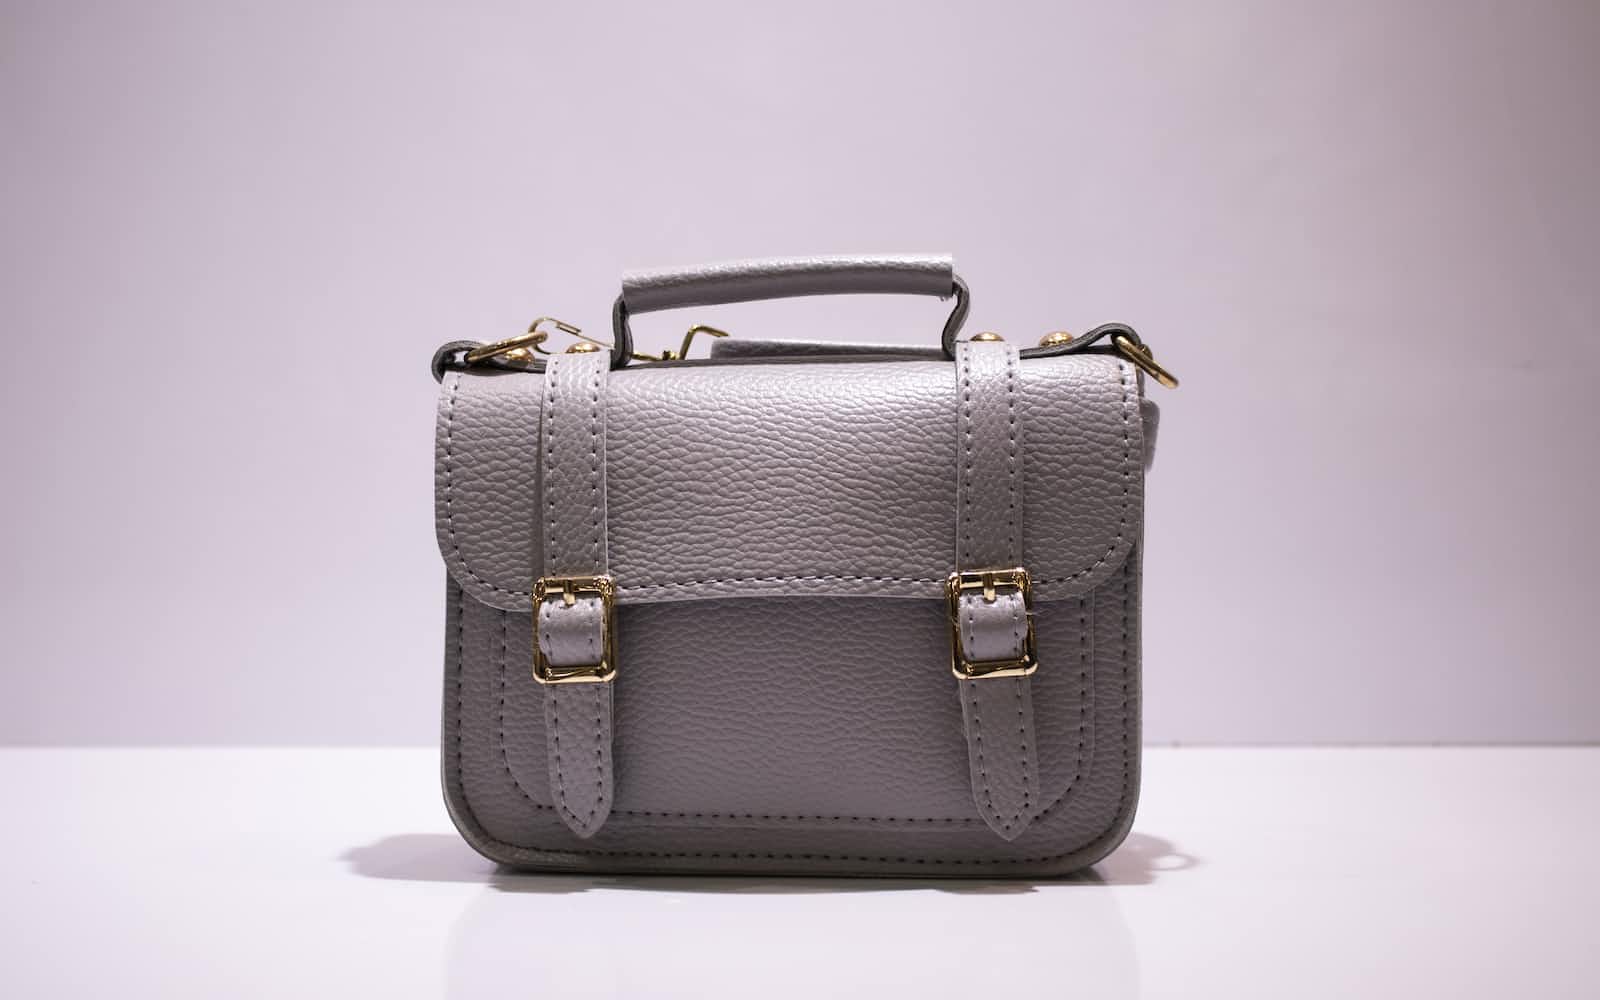 Luxurious sparkly handbag